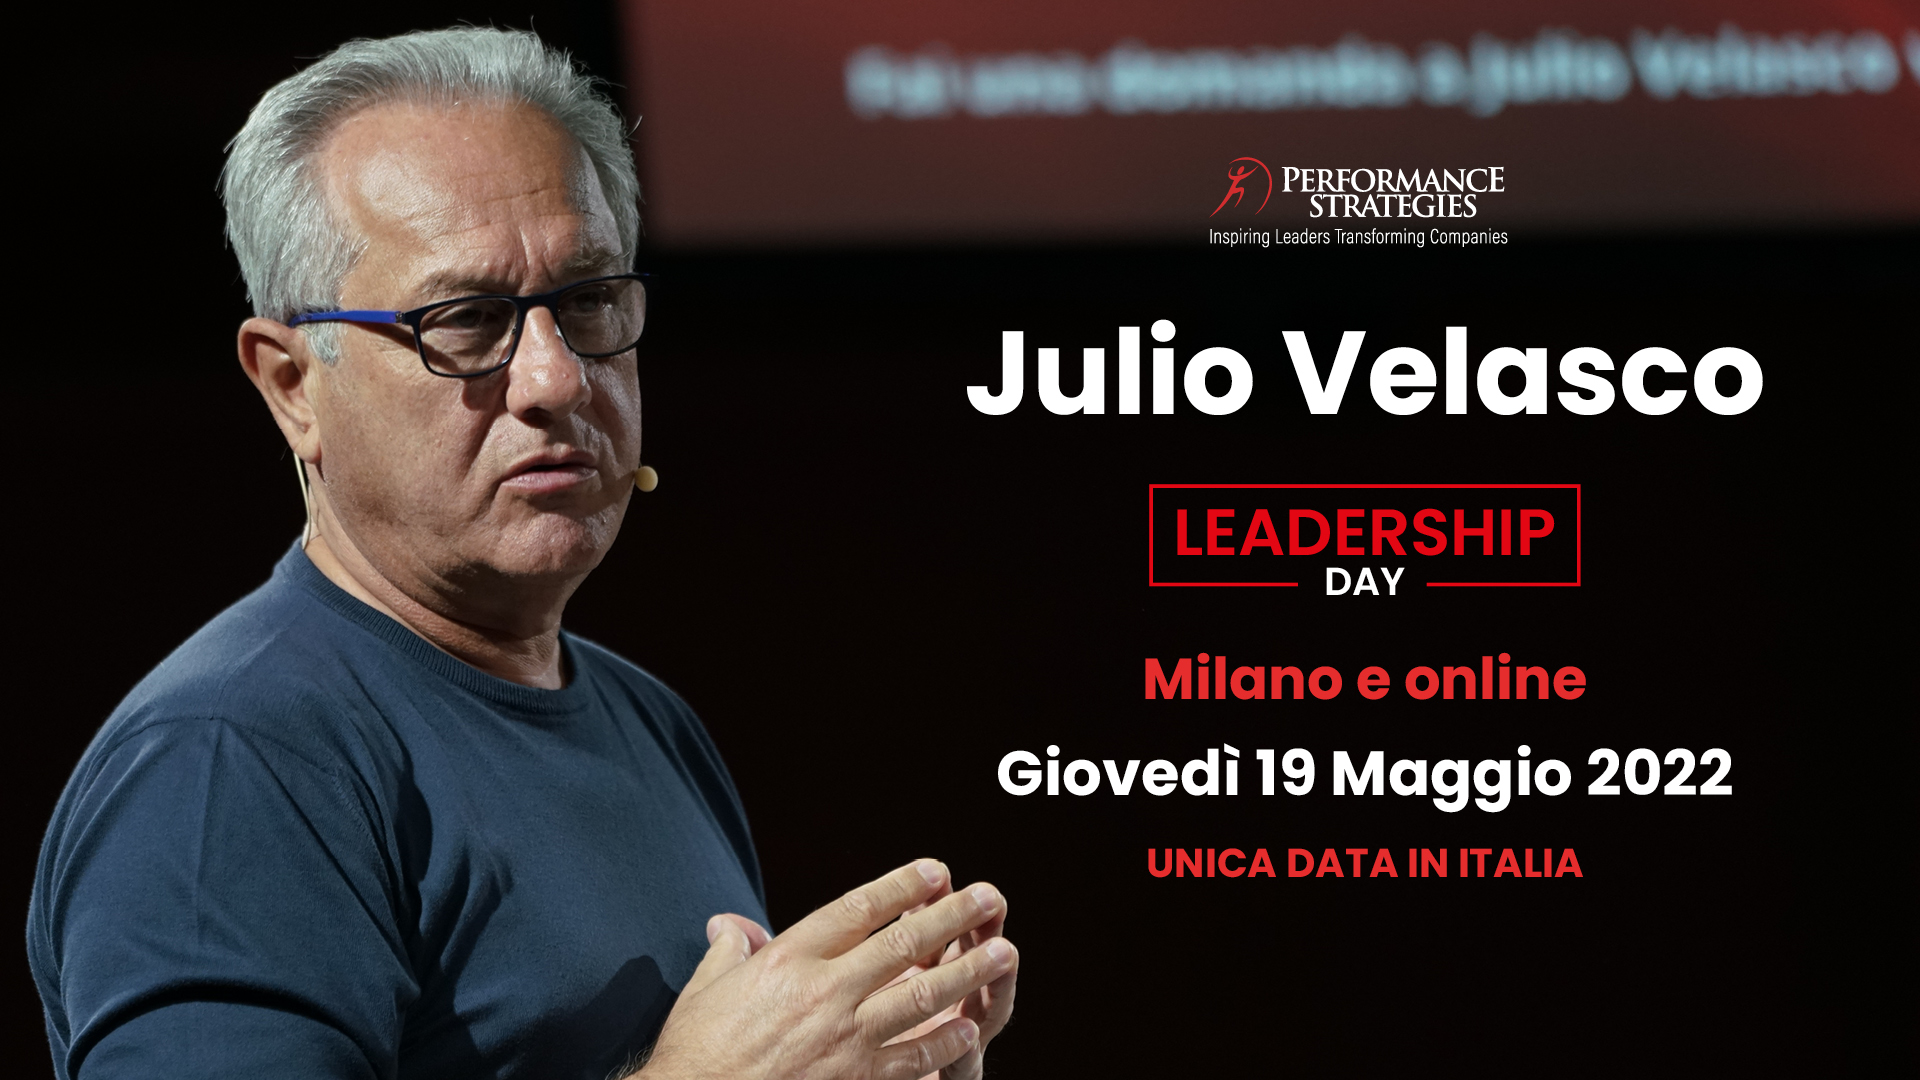 LEADERSHIP DAY - JULIO VELASCO